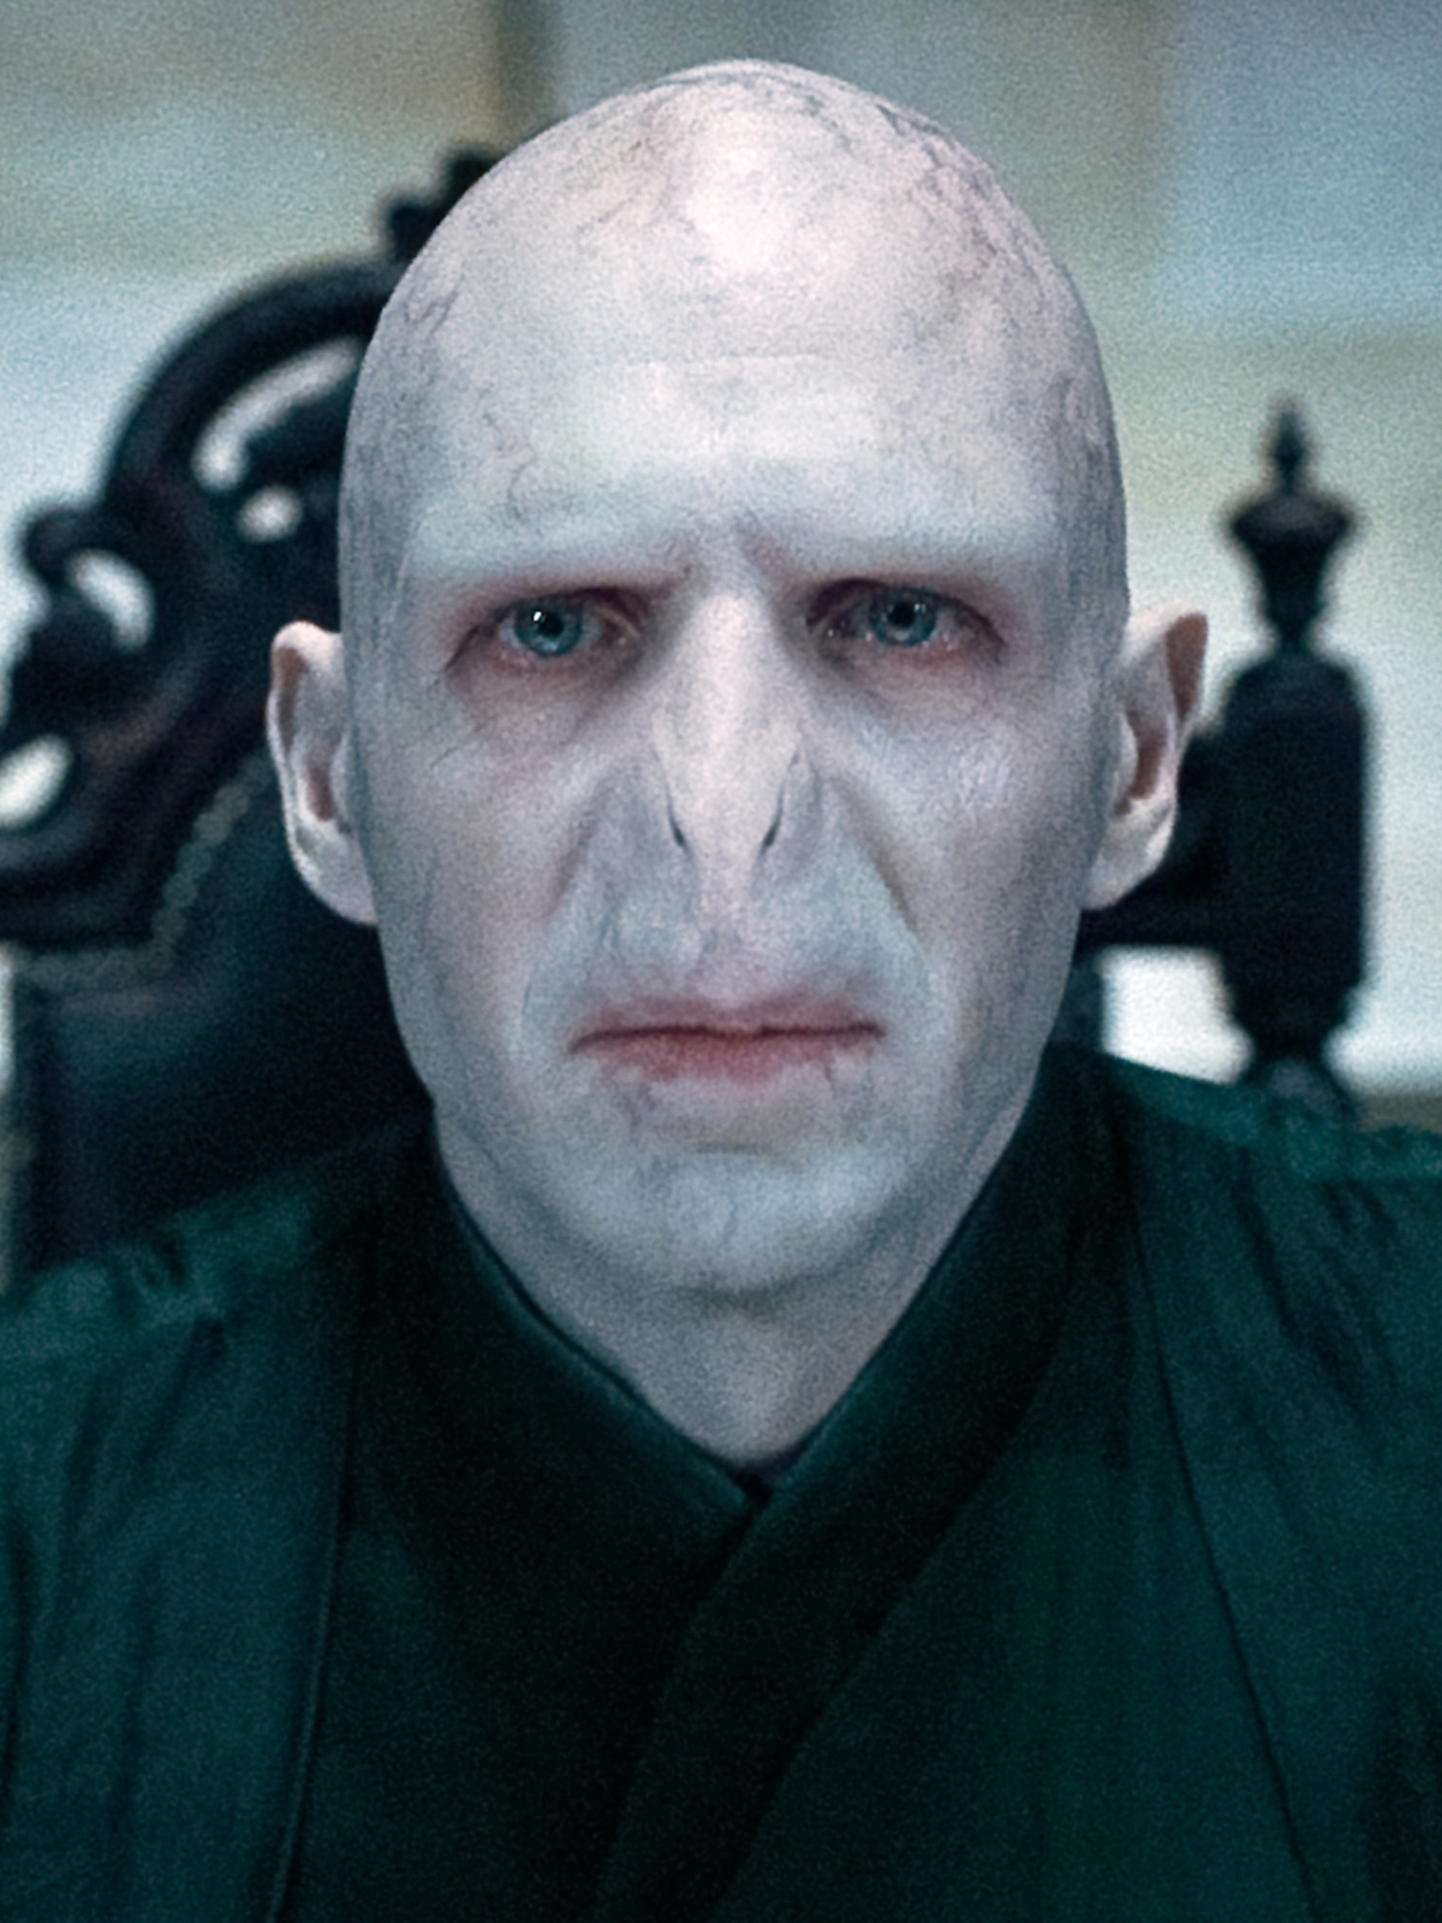 Poliitik
Lord Voldemort